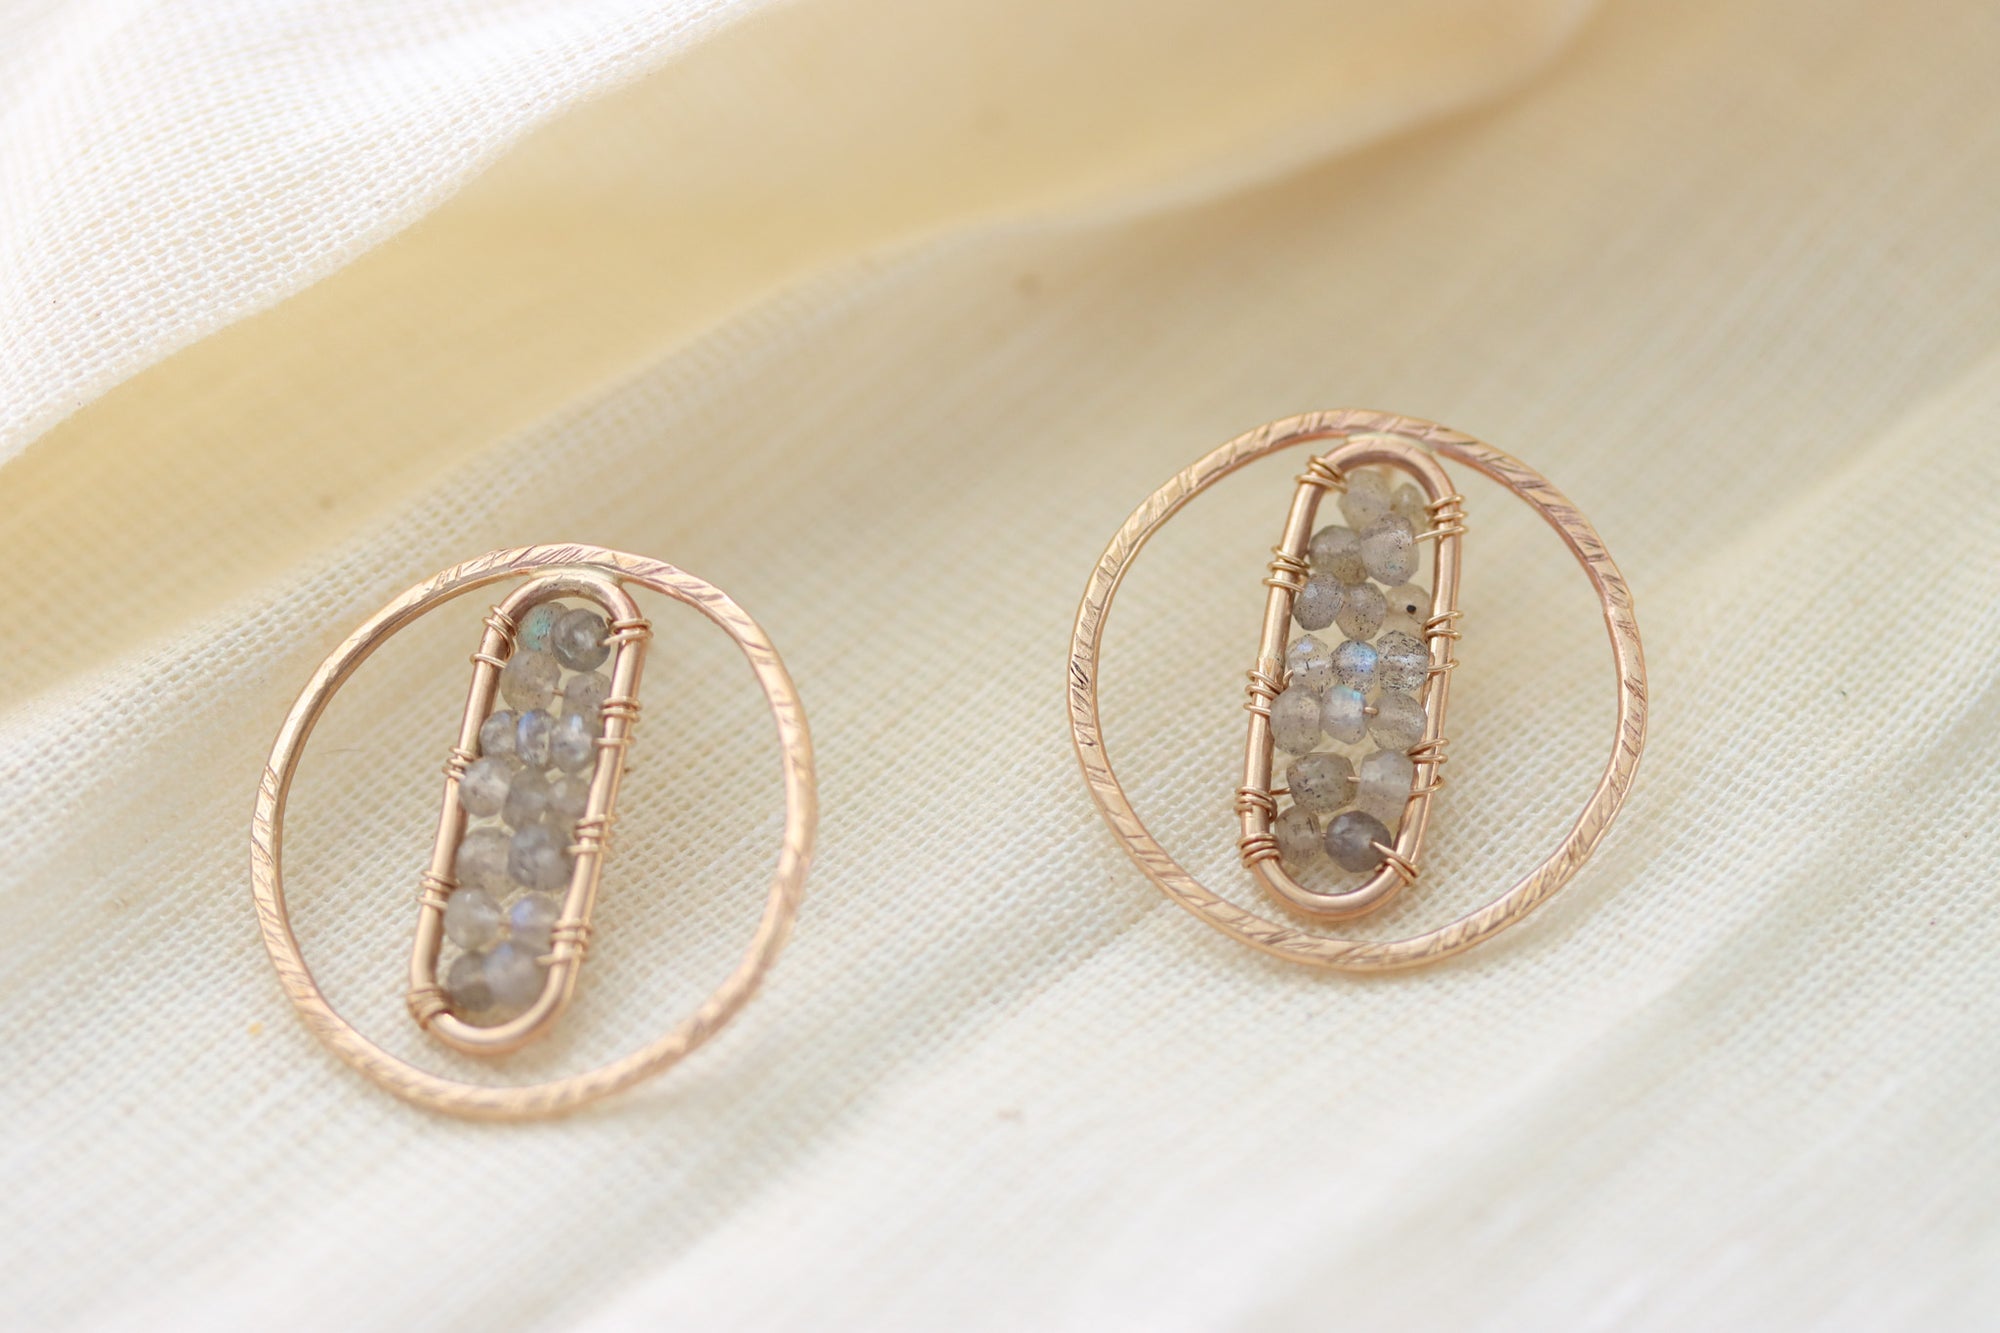 Labradorite Gemstone Earrings, 14k Gold Filled Post Earrings